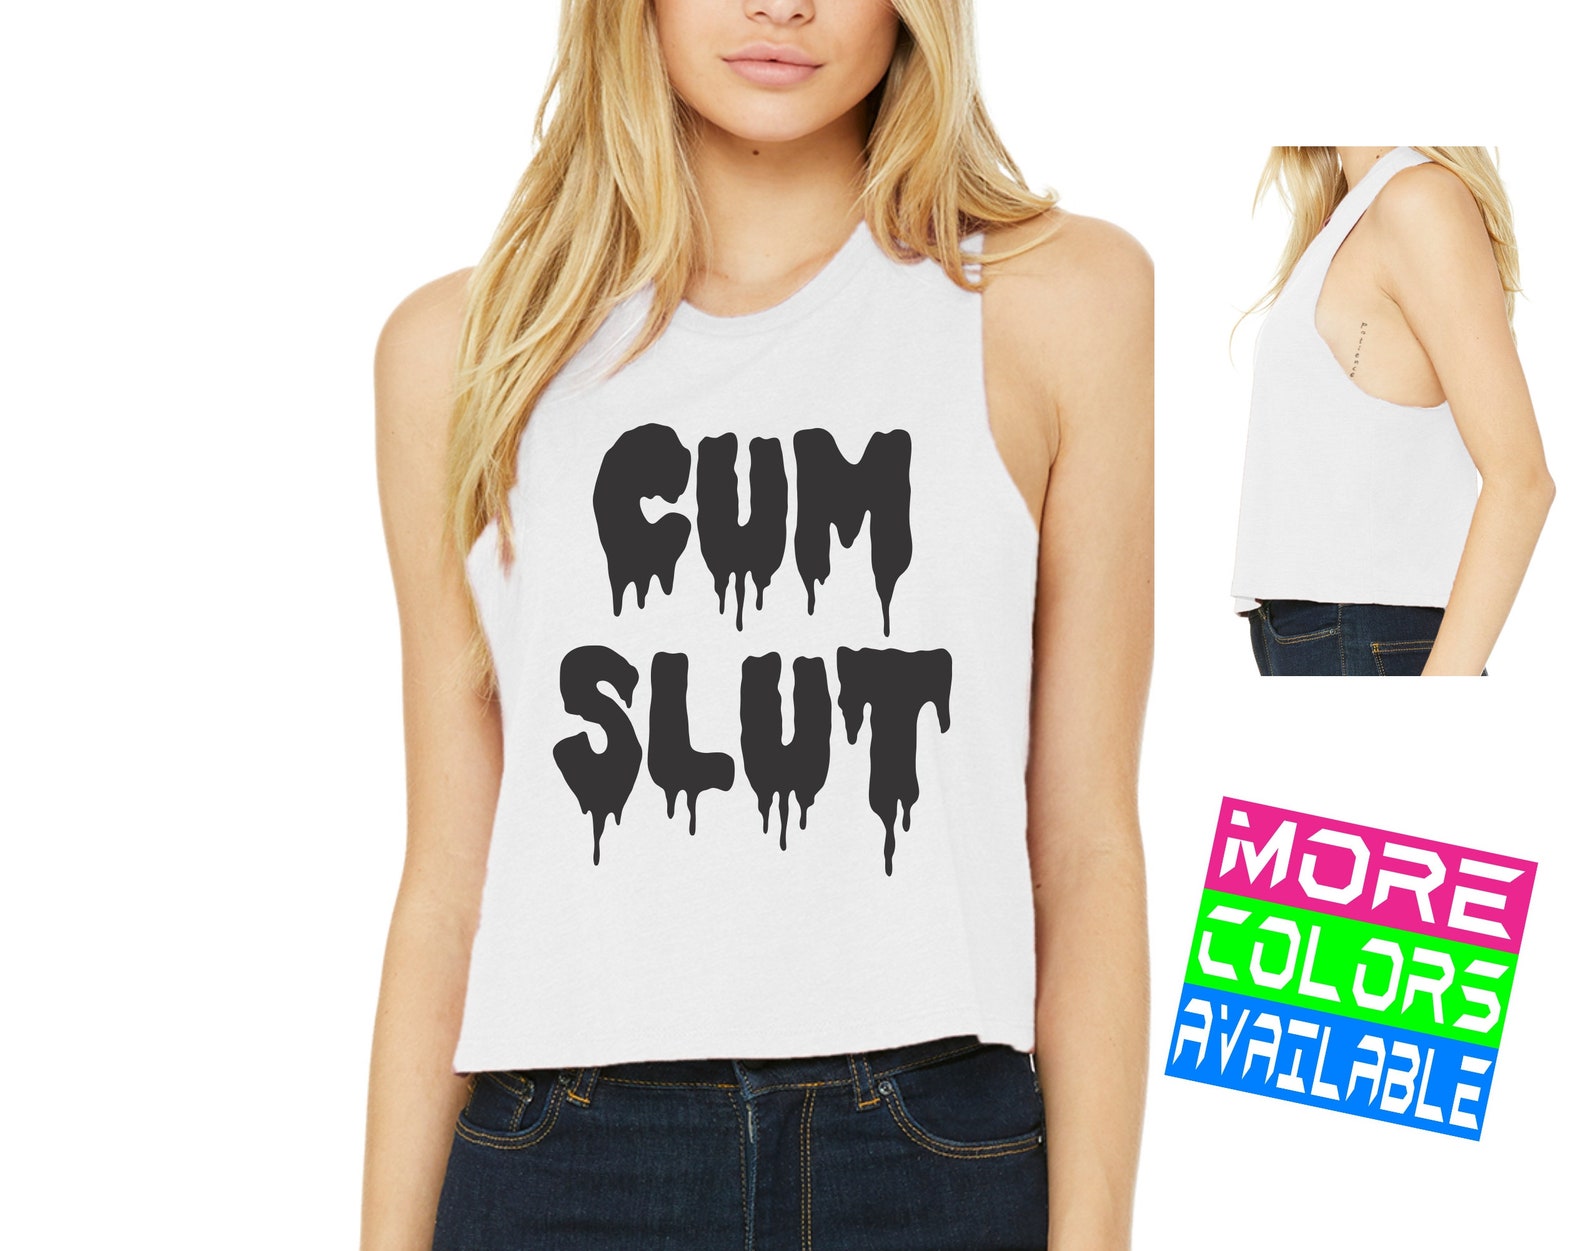 CUM SLUT Crop Tank Top Shirt Womens Sexy Hot Side Boob Tee image 0.